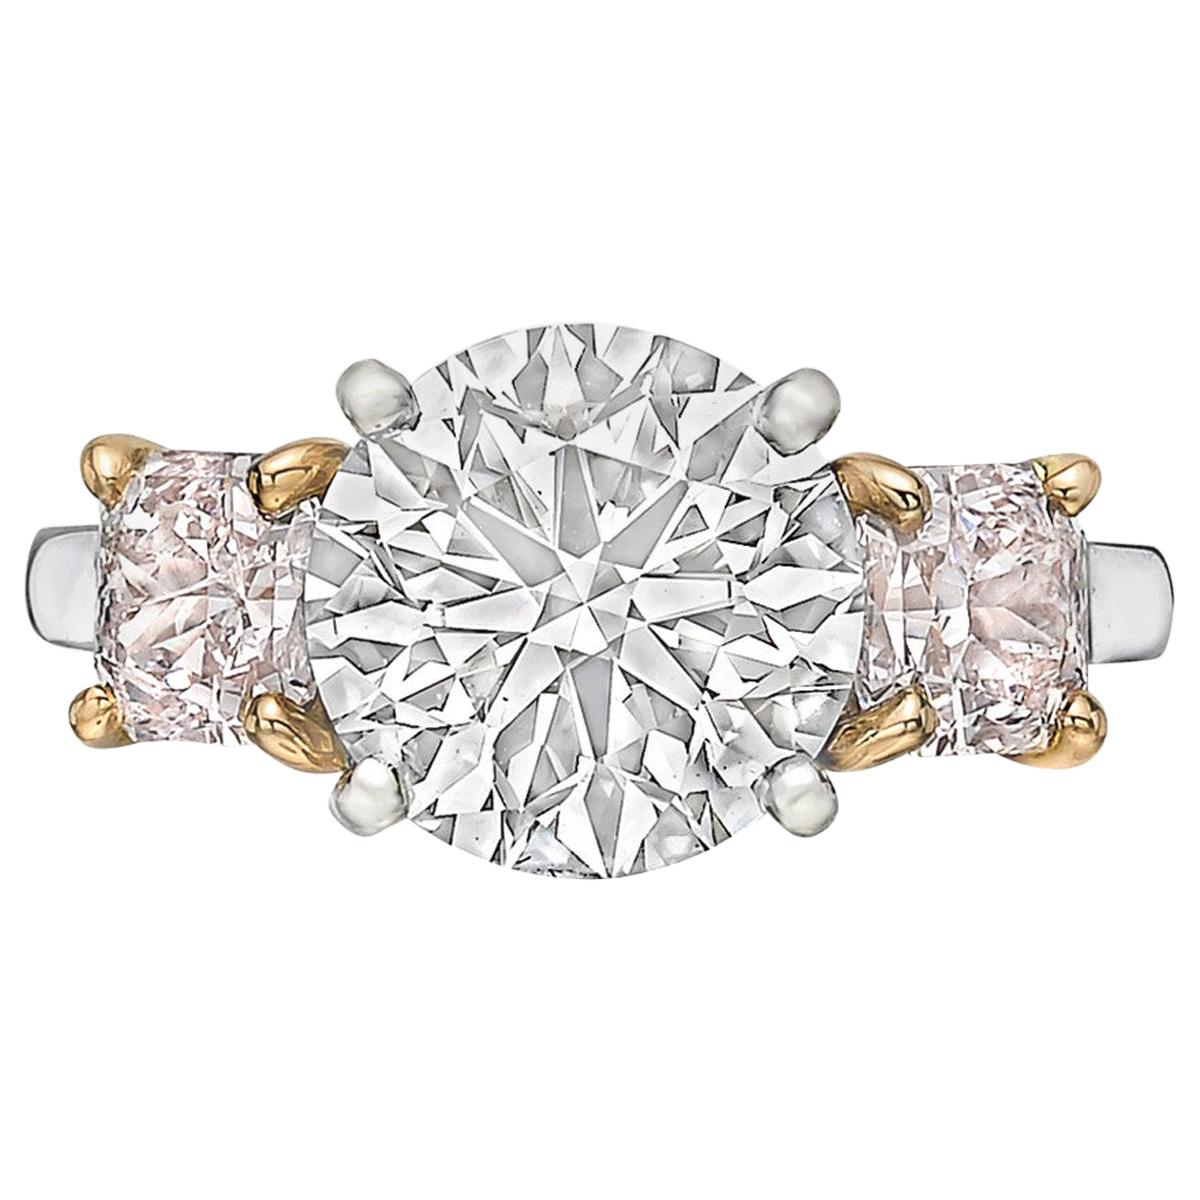 Betteridge 2.51 Carat Round Brilliant Diamond Engagement Ring